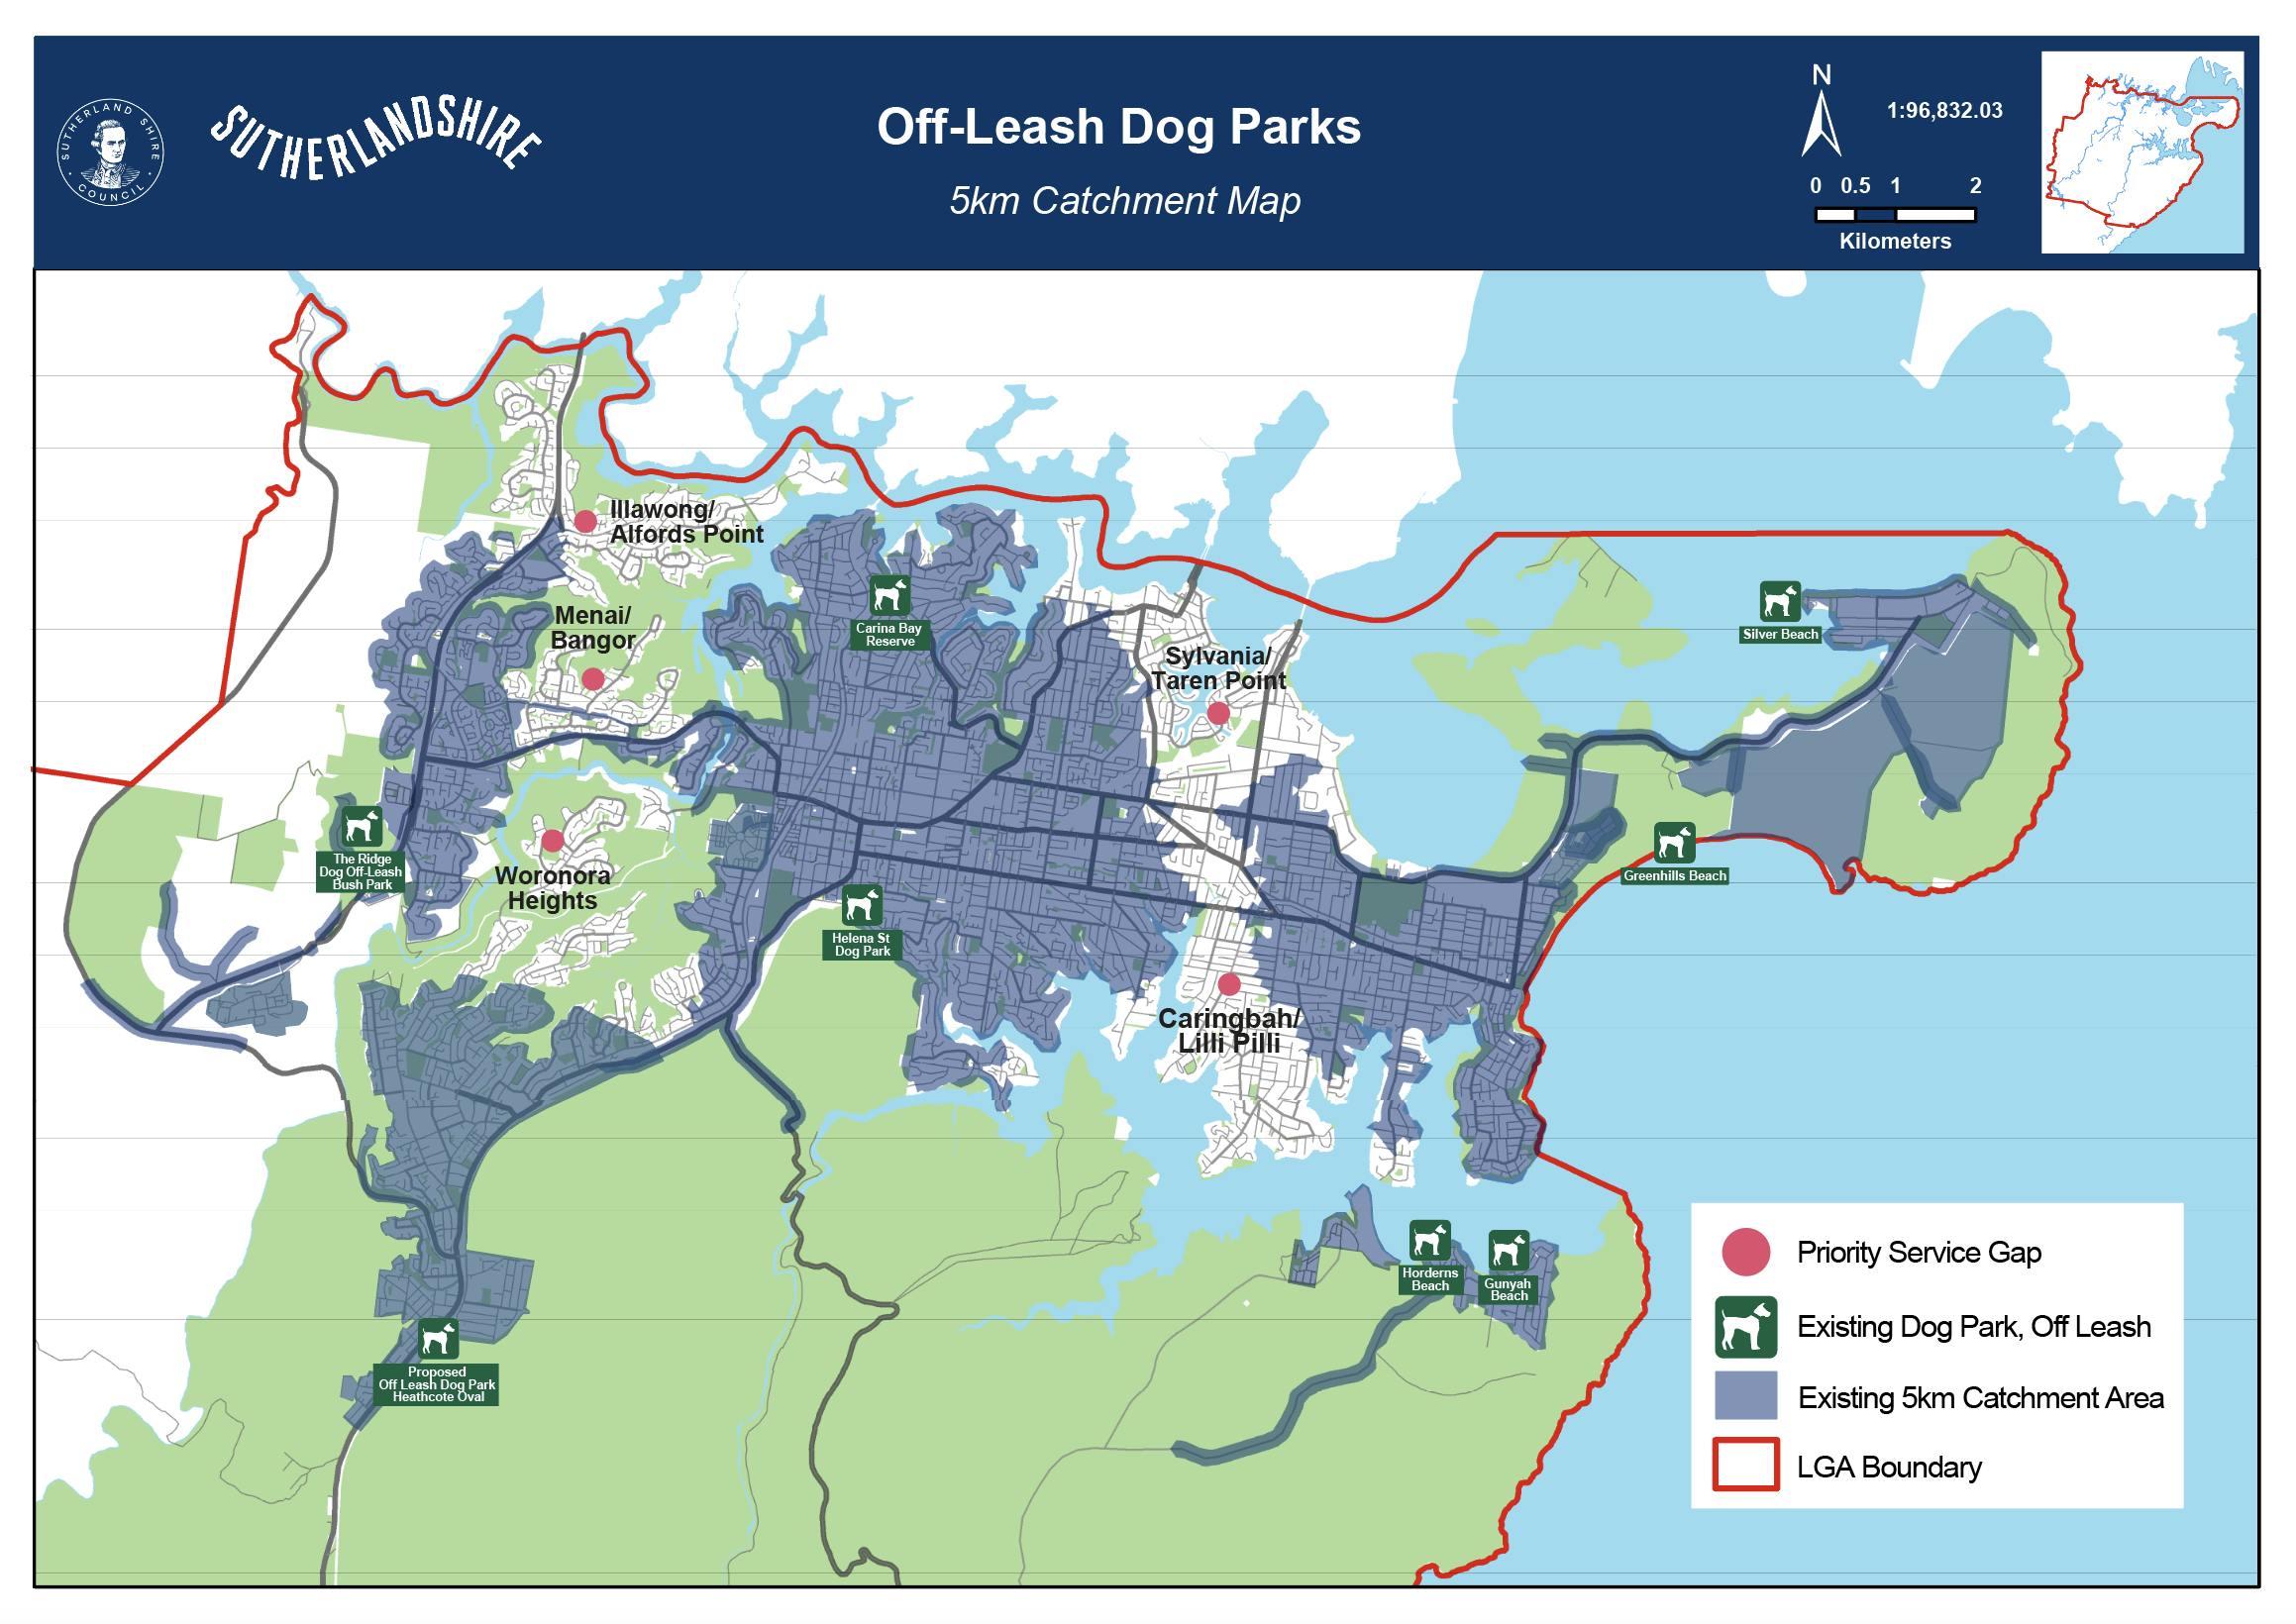 5km Catchment Map - Off-leash dog parks